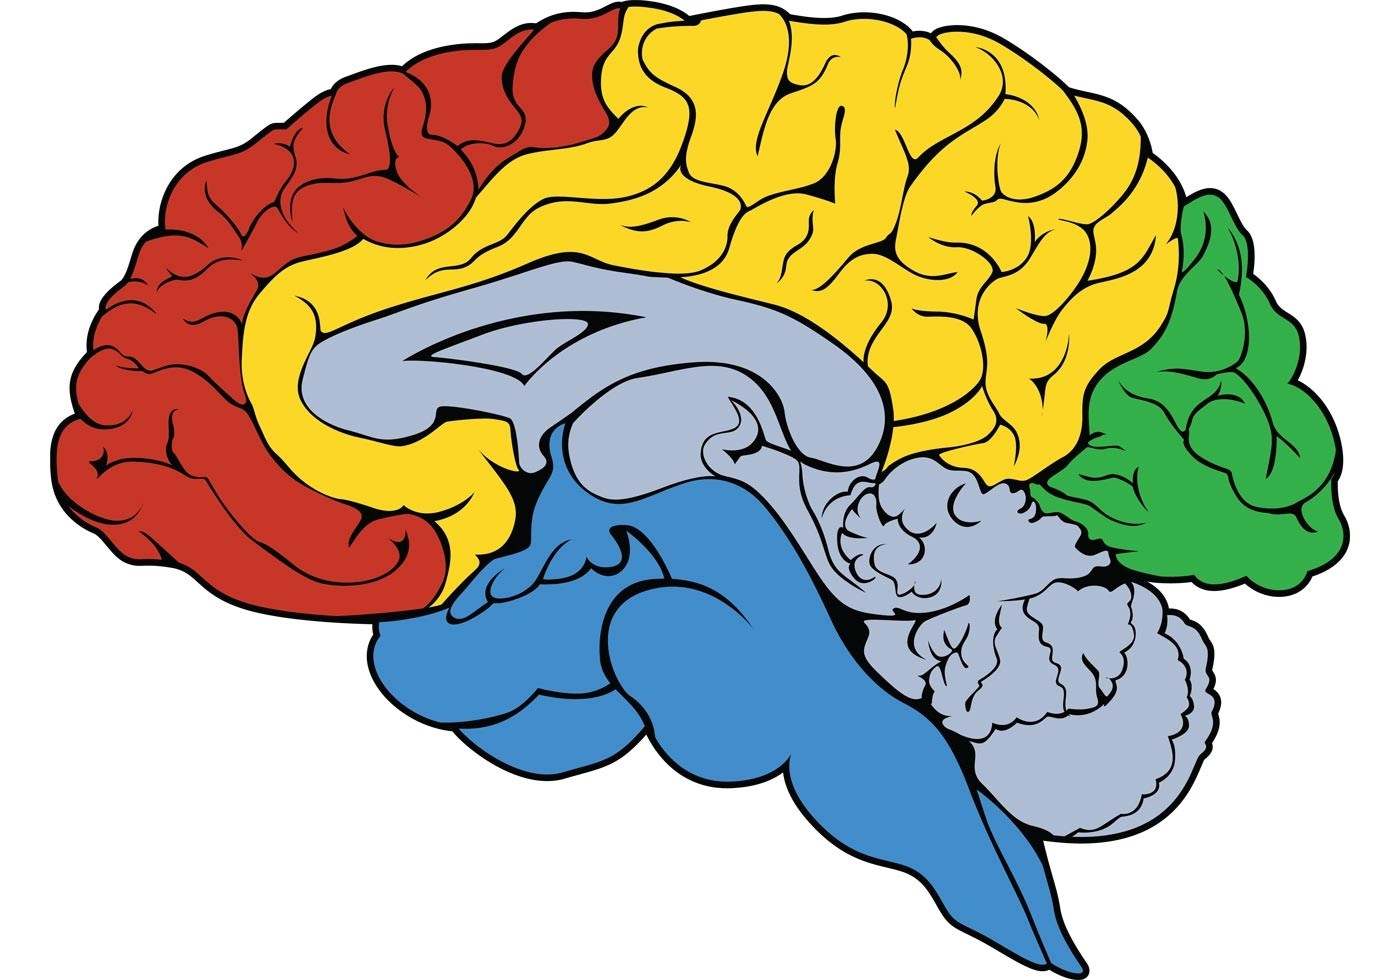 Brain pdf. Мозг рисунок. Мозг картинка. Мозг вектор.